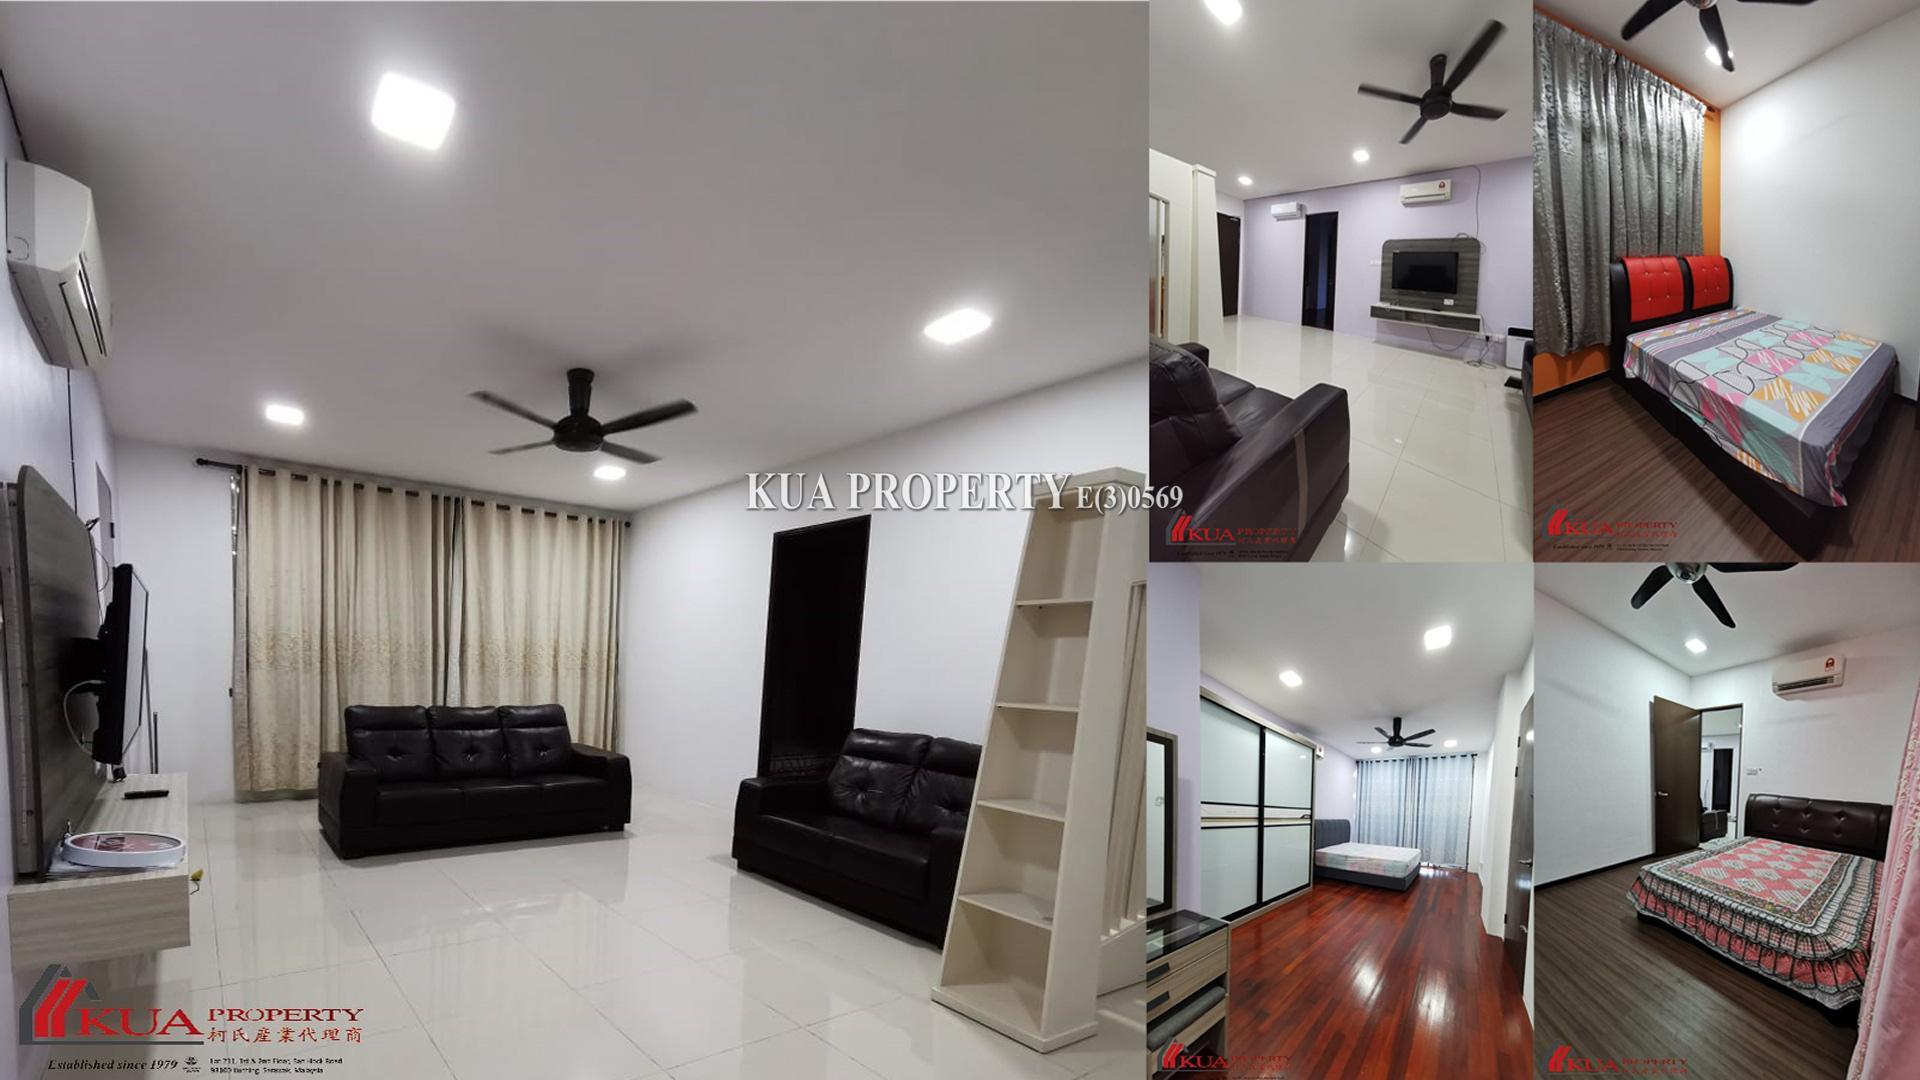 Tropics Condominium For Rent! at Jalan Song, Kuching